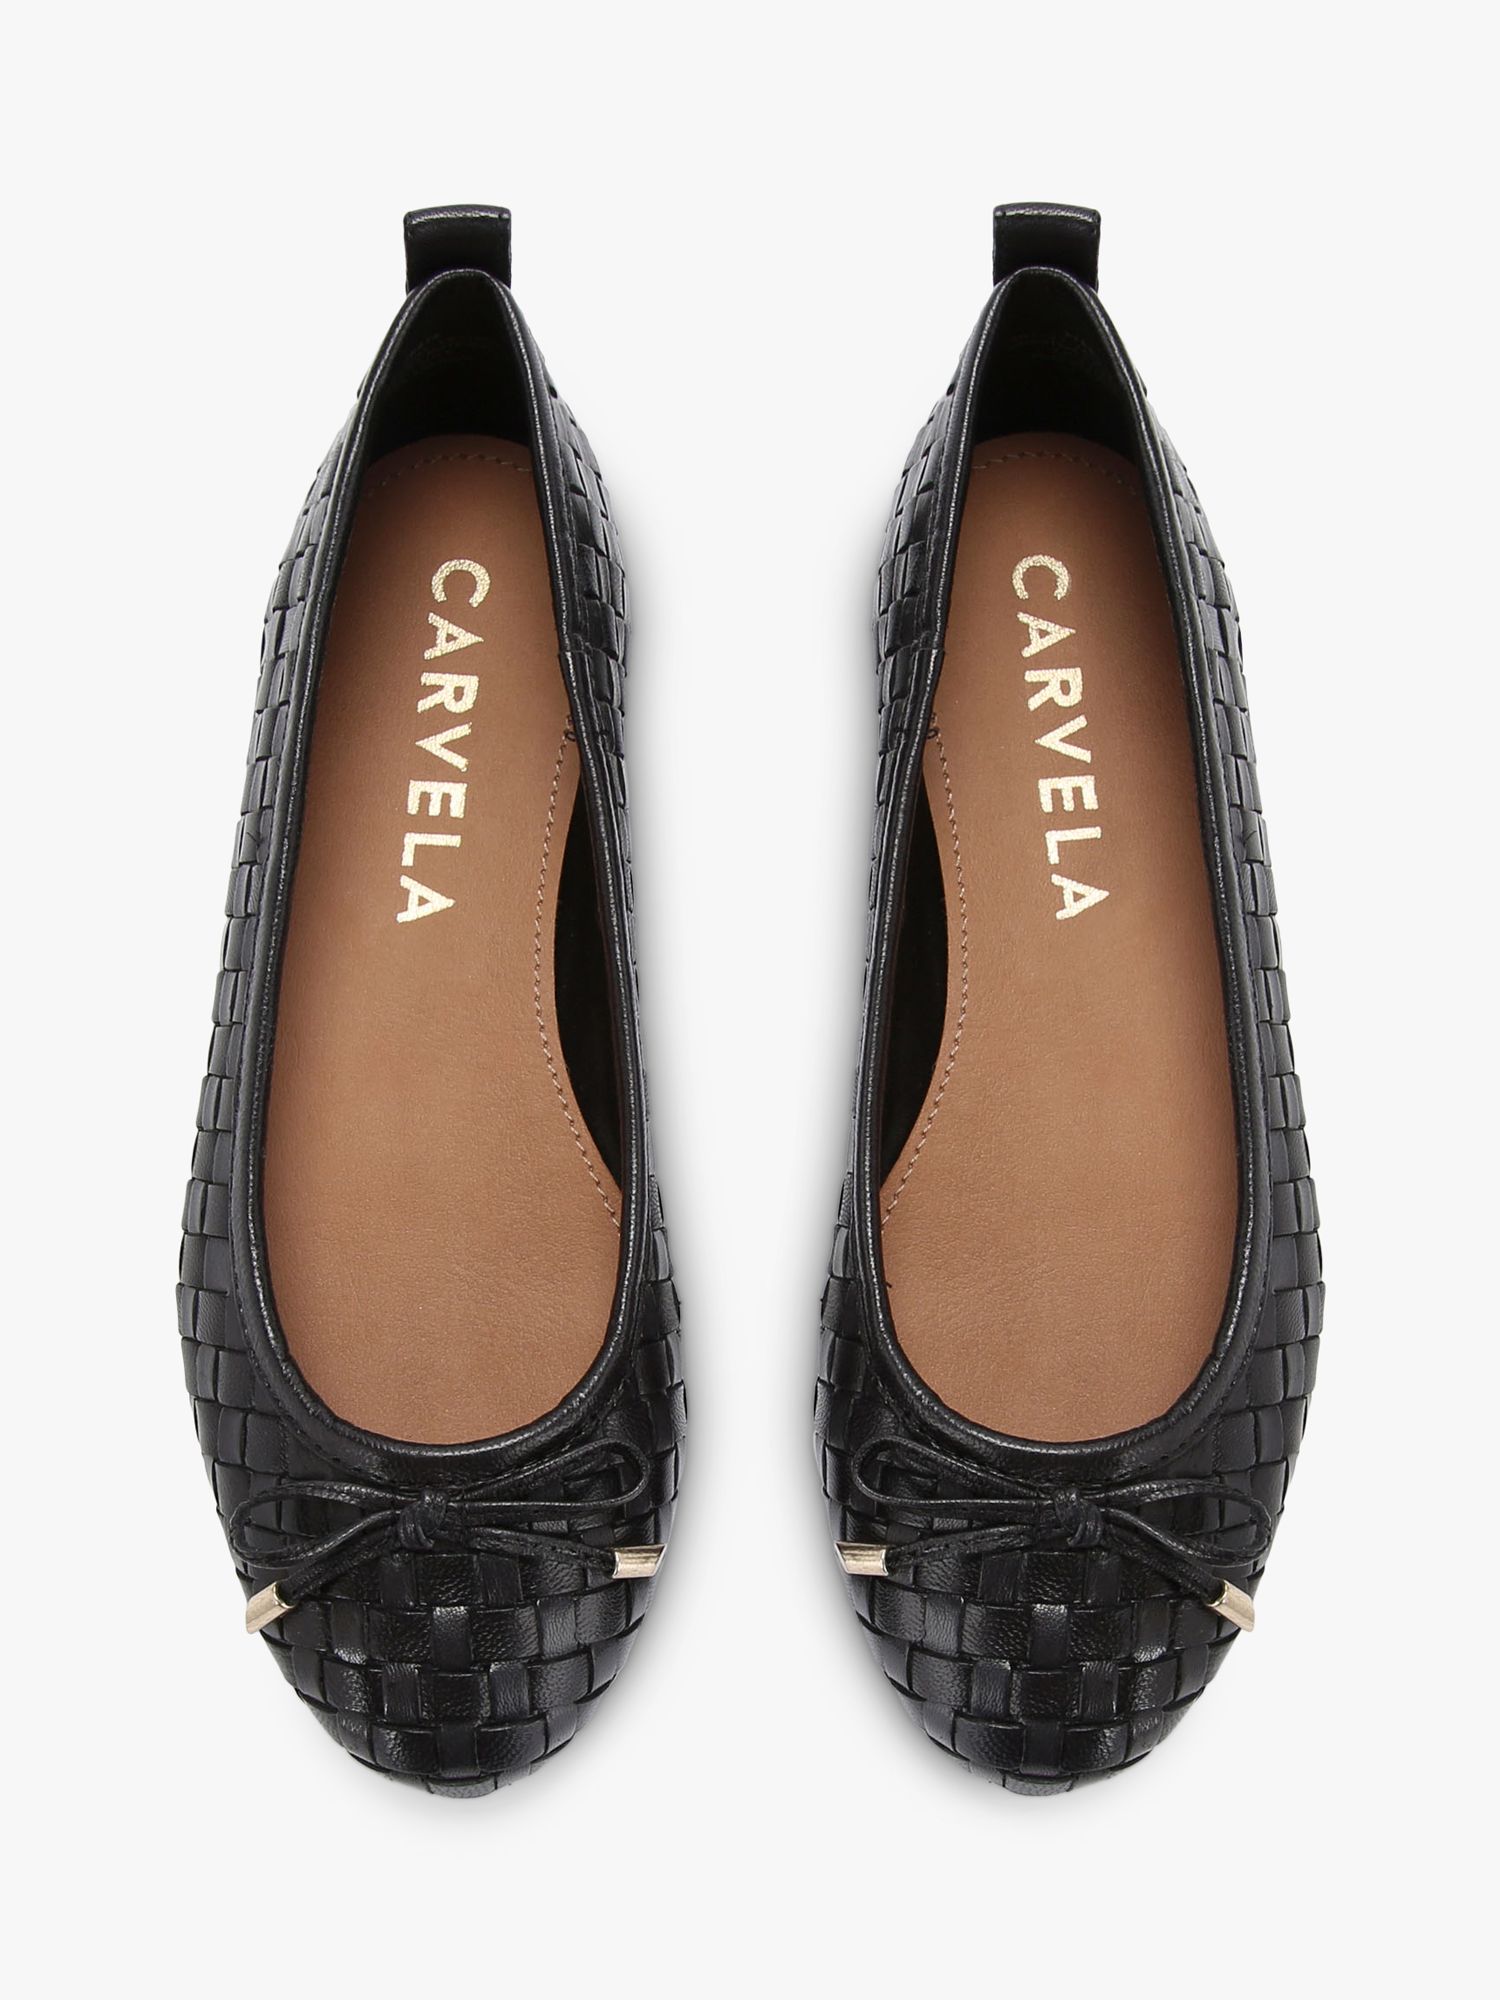 Carvela Evie Leather Ballet Shoes, Black, 3